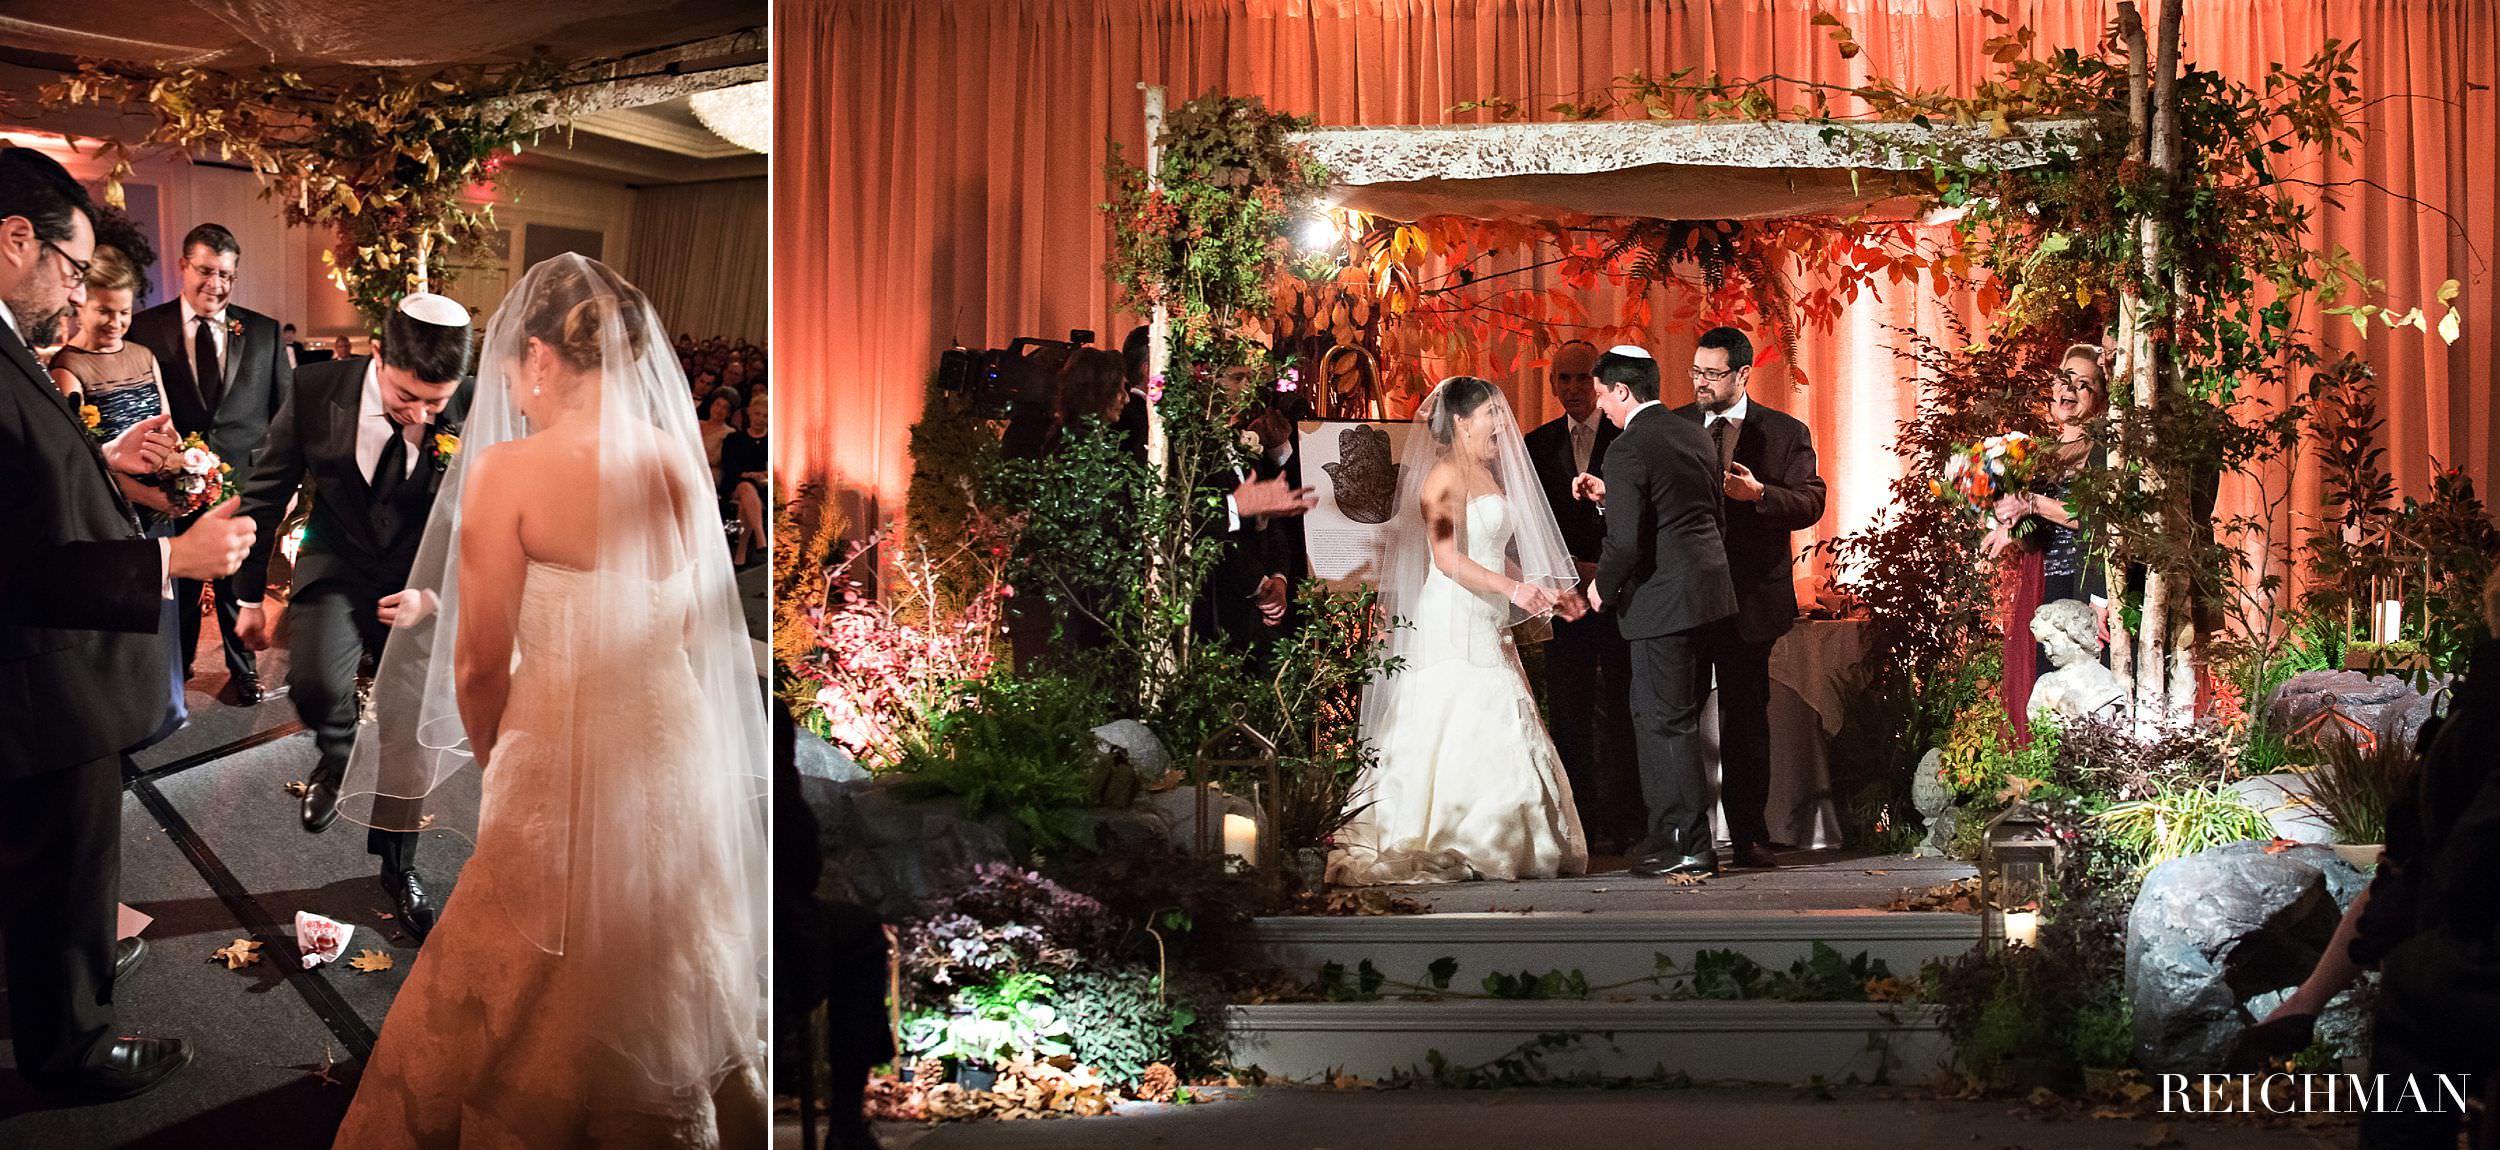 groom stepping on glass Jewish wedding